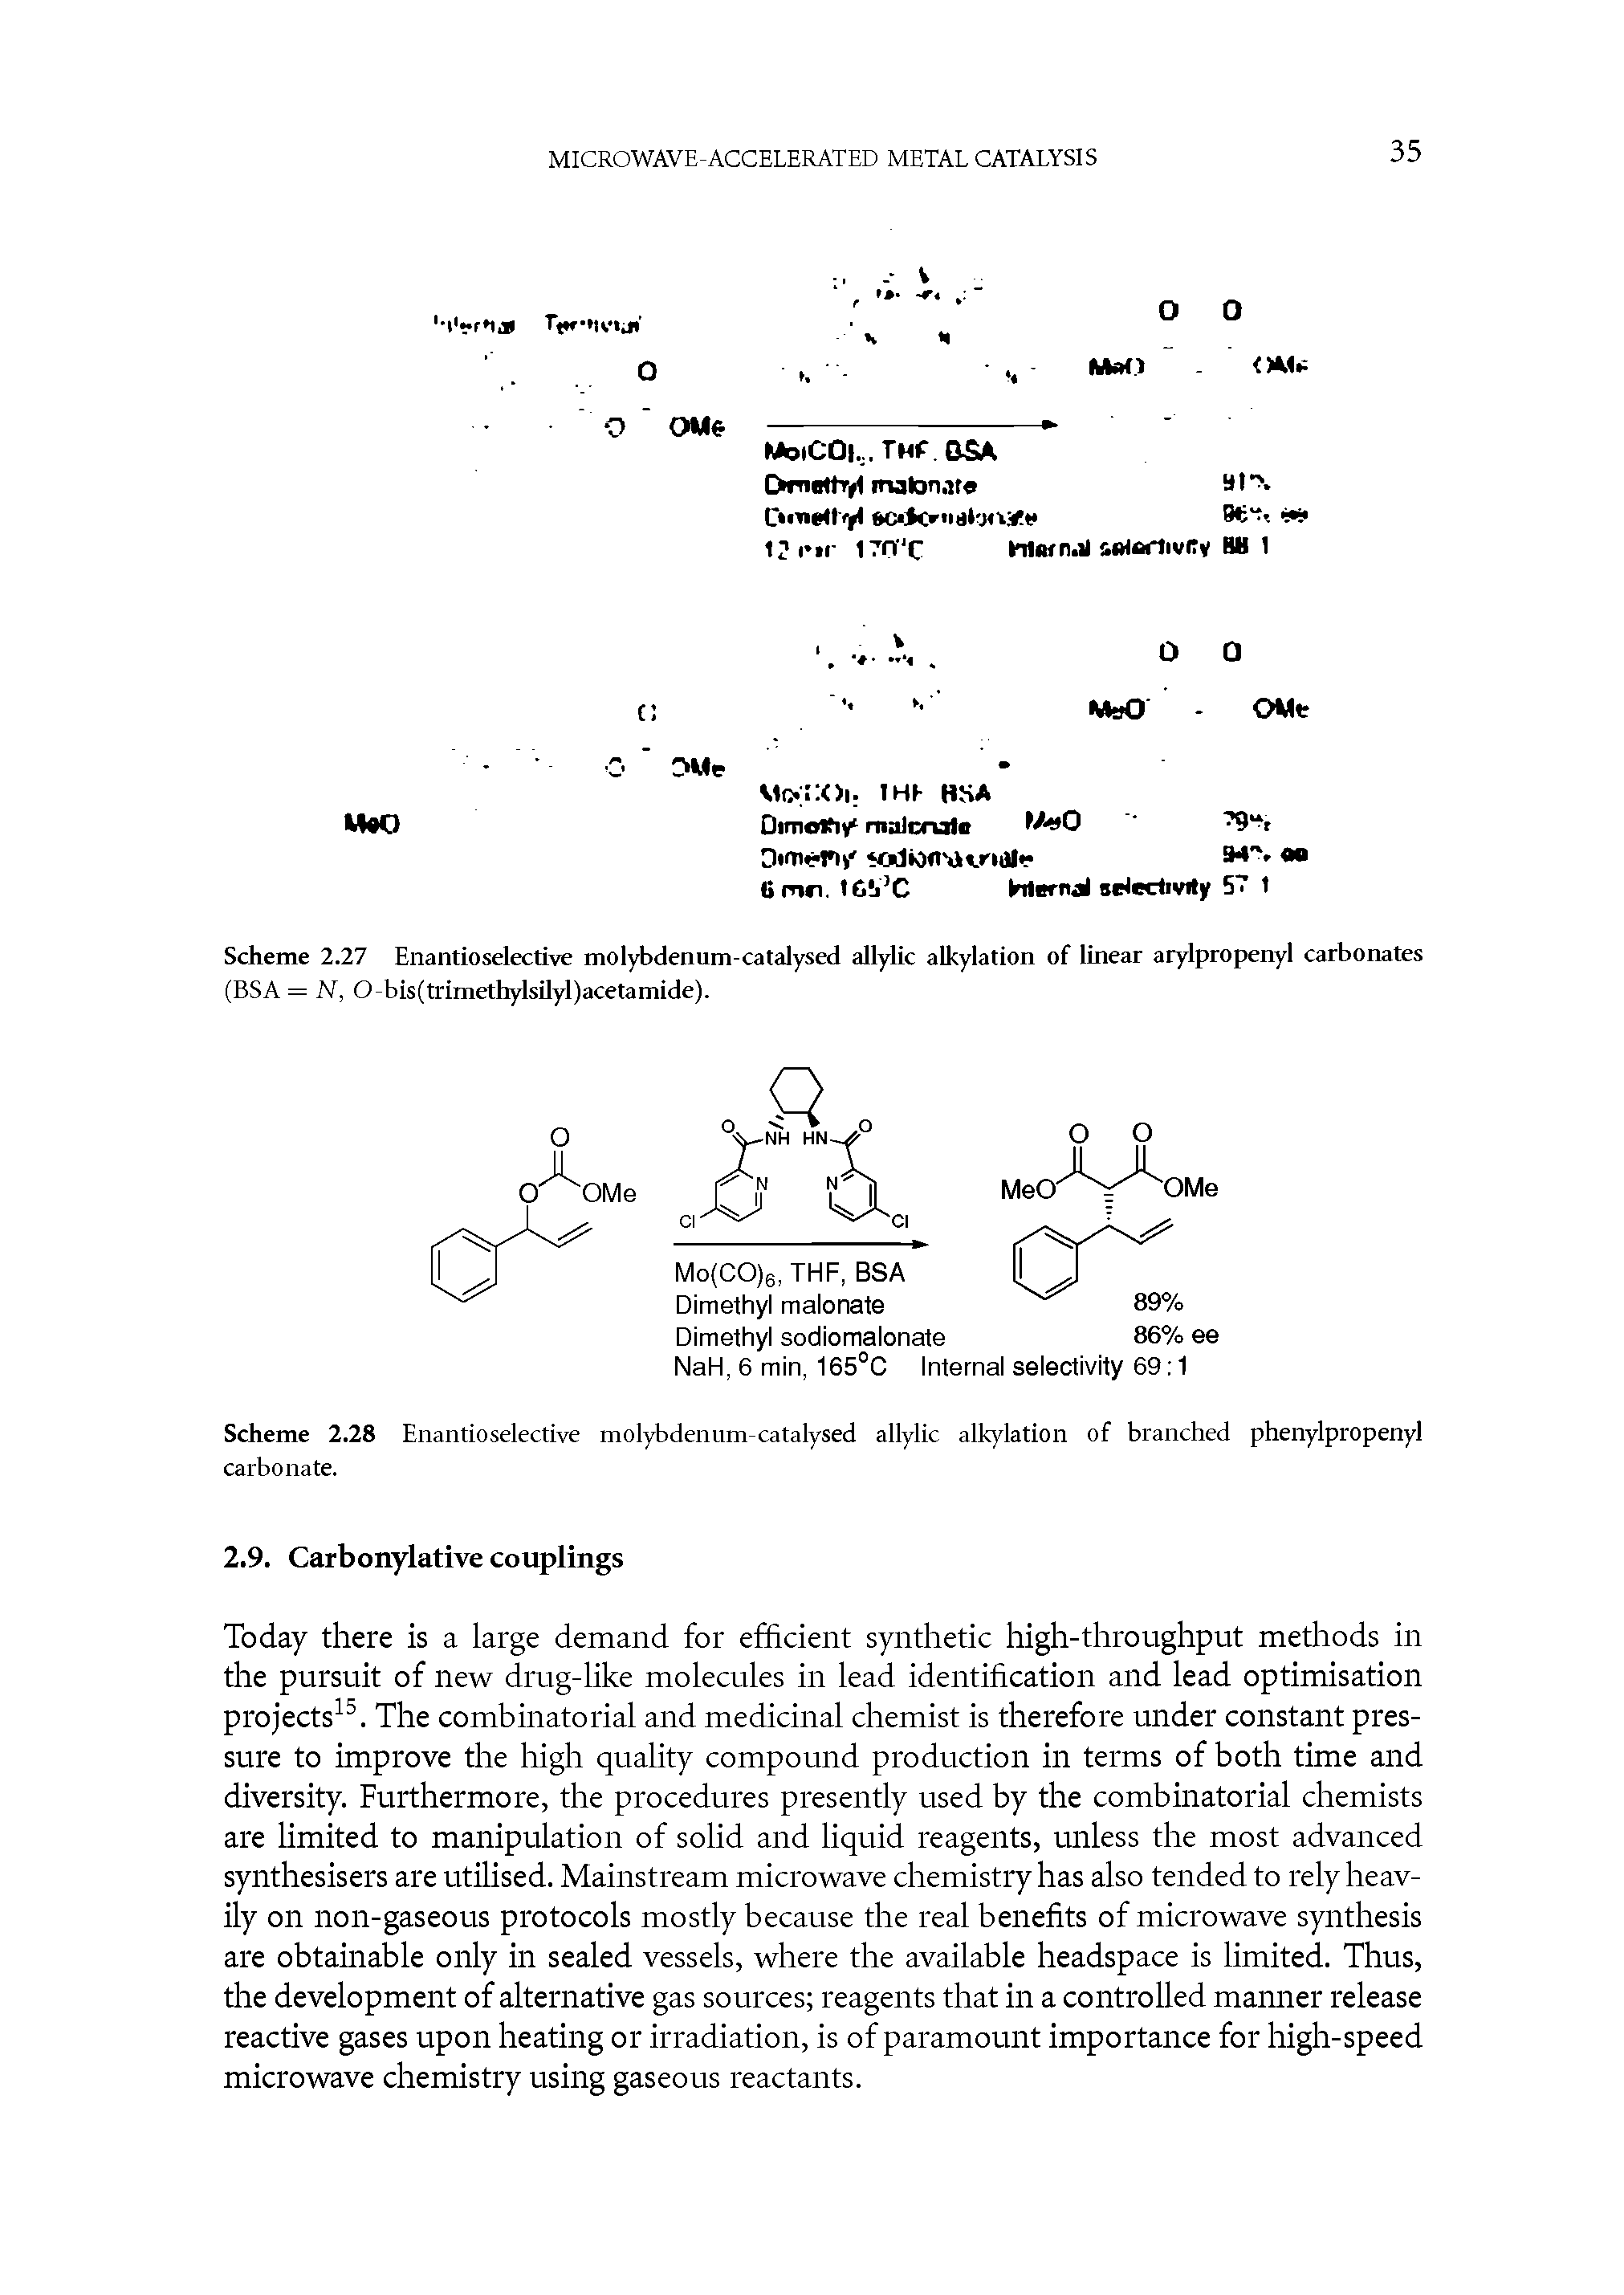 Scheme 2.27 Enantioselective molybdenum-catalysed allylic alkylation of linear arylpropenyl carbonates (BSA = N, O-bis(trimethylsilyl)acetamide).